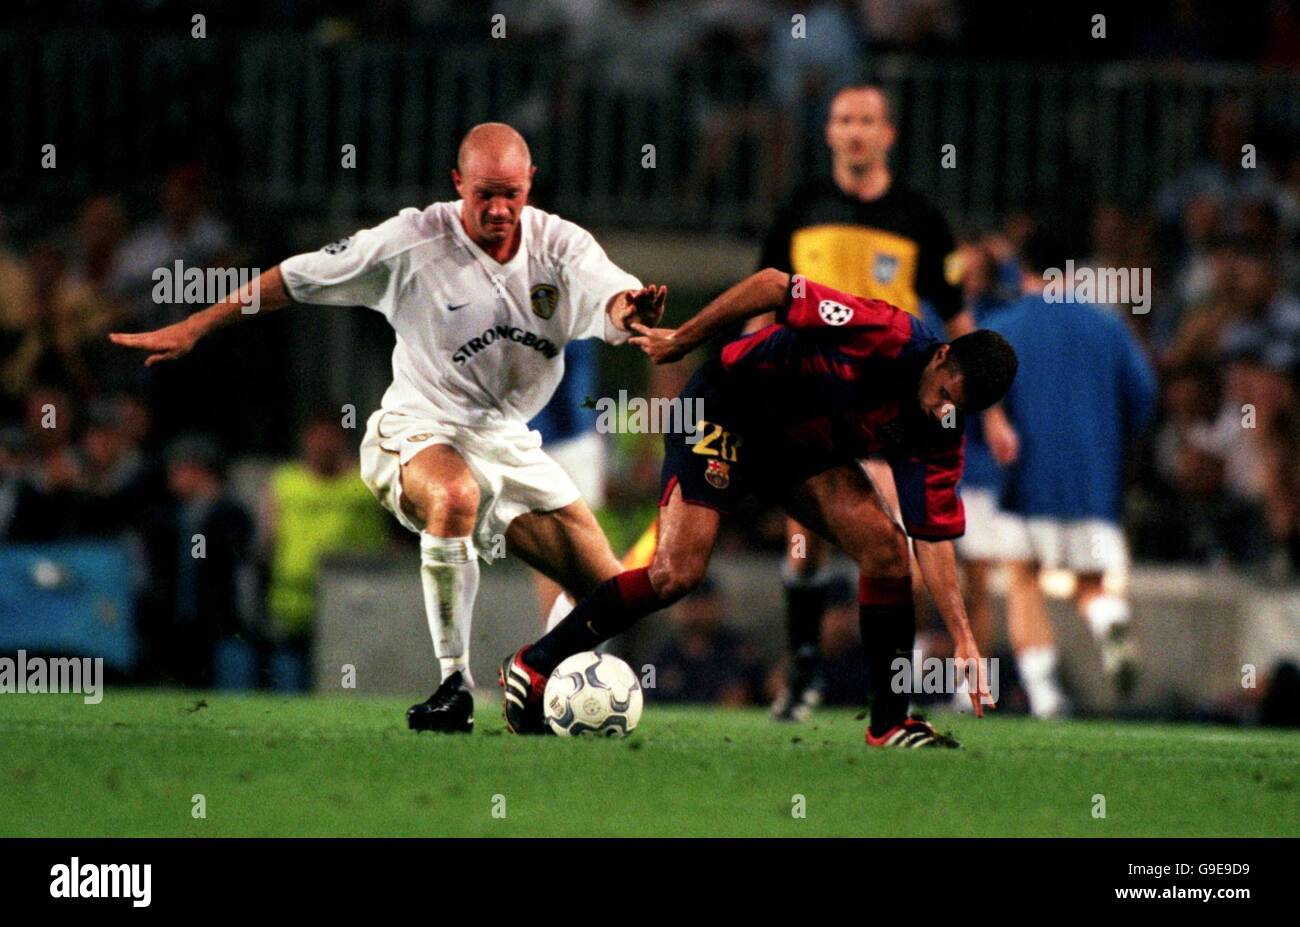 Soccer - UEFA Champions League - Group H - Barcelona v Leeds United. Leeds United's Danny Mills (l) battles with Barcelona's Simao Sabrosa (r) Stock Photo